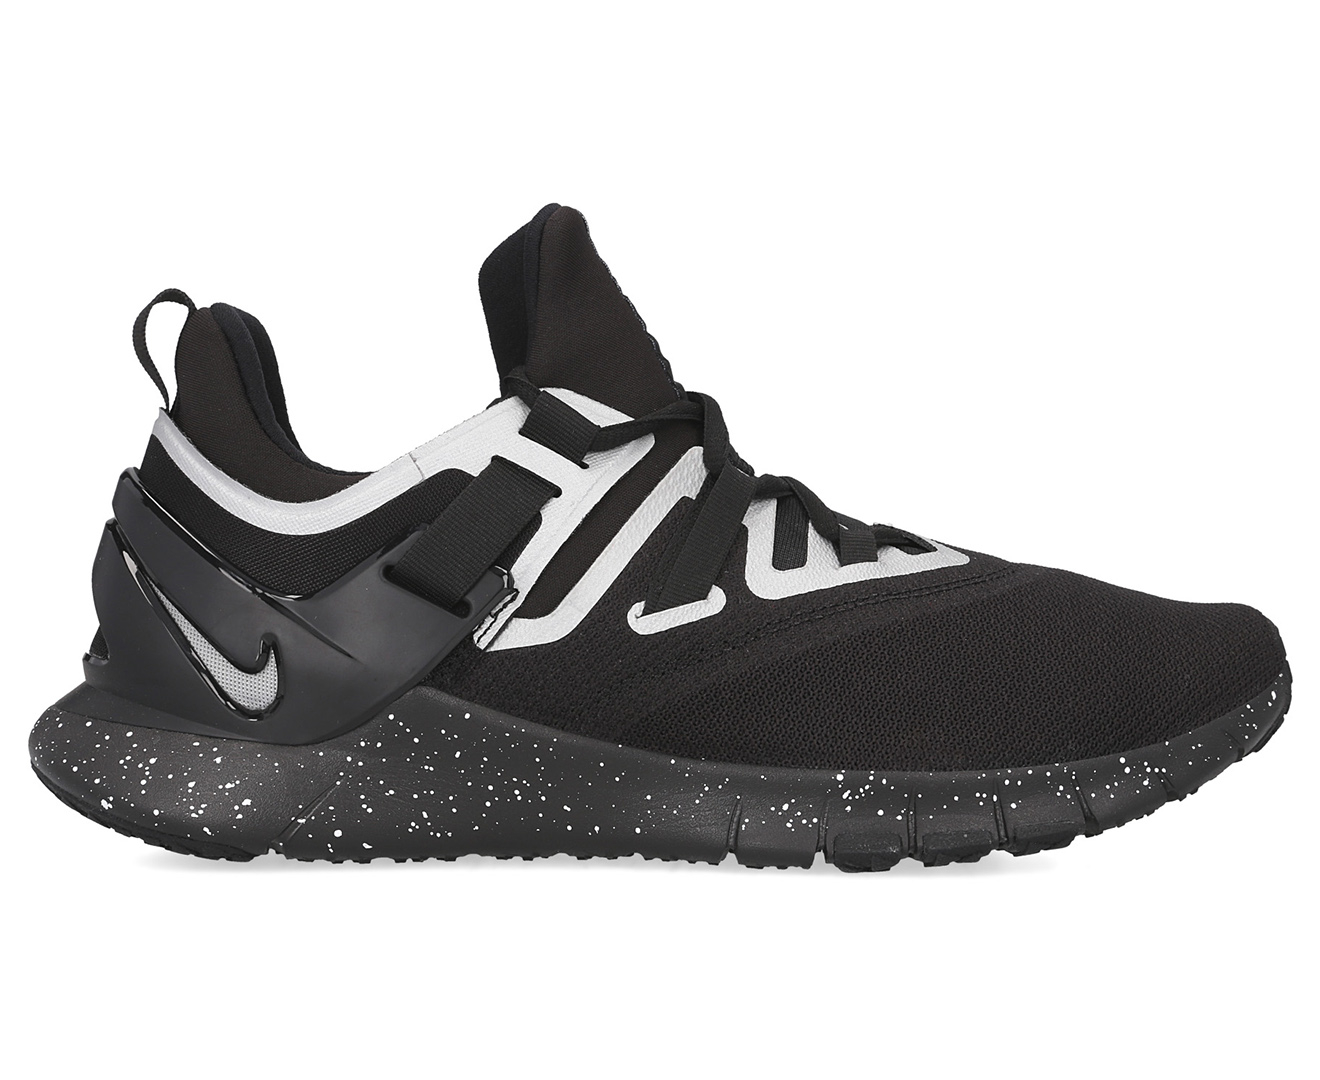 Nike Men's Flexmethod TR Training Shoes - Black/Metallic Silver | Catch ...